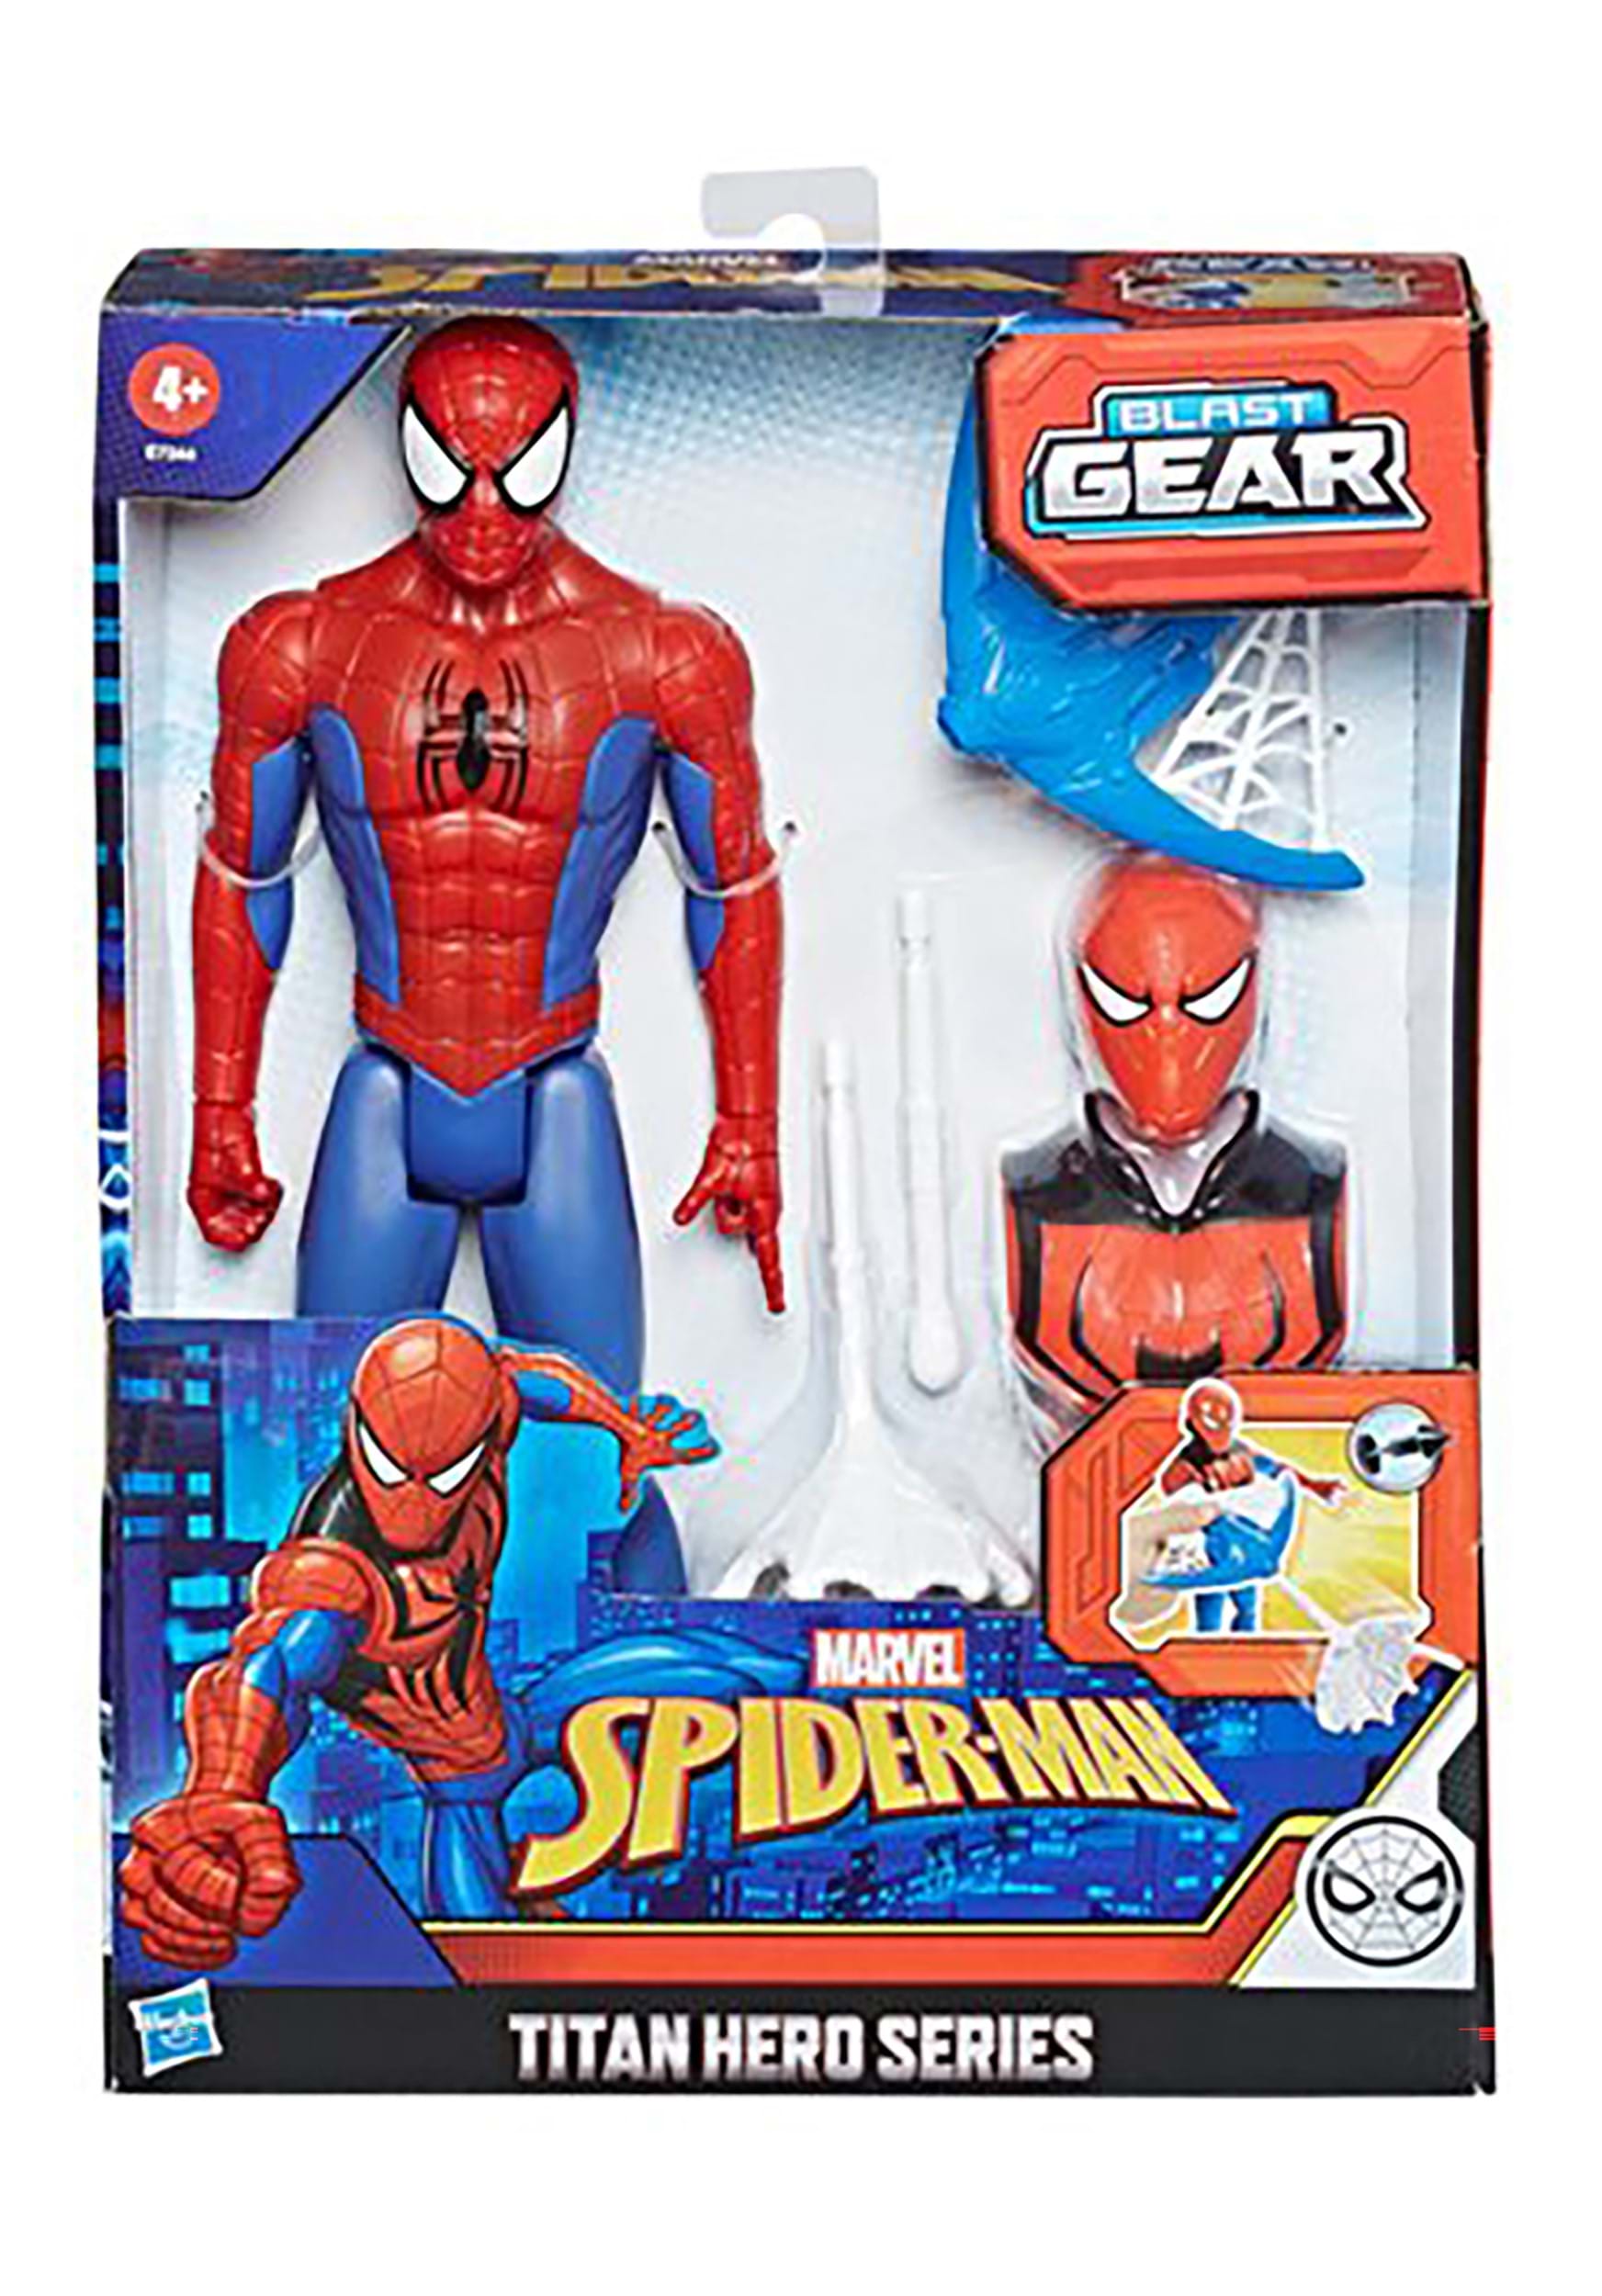 Spiderman Titan Innovation